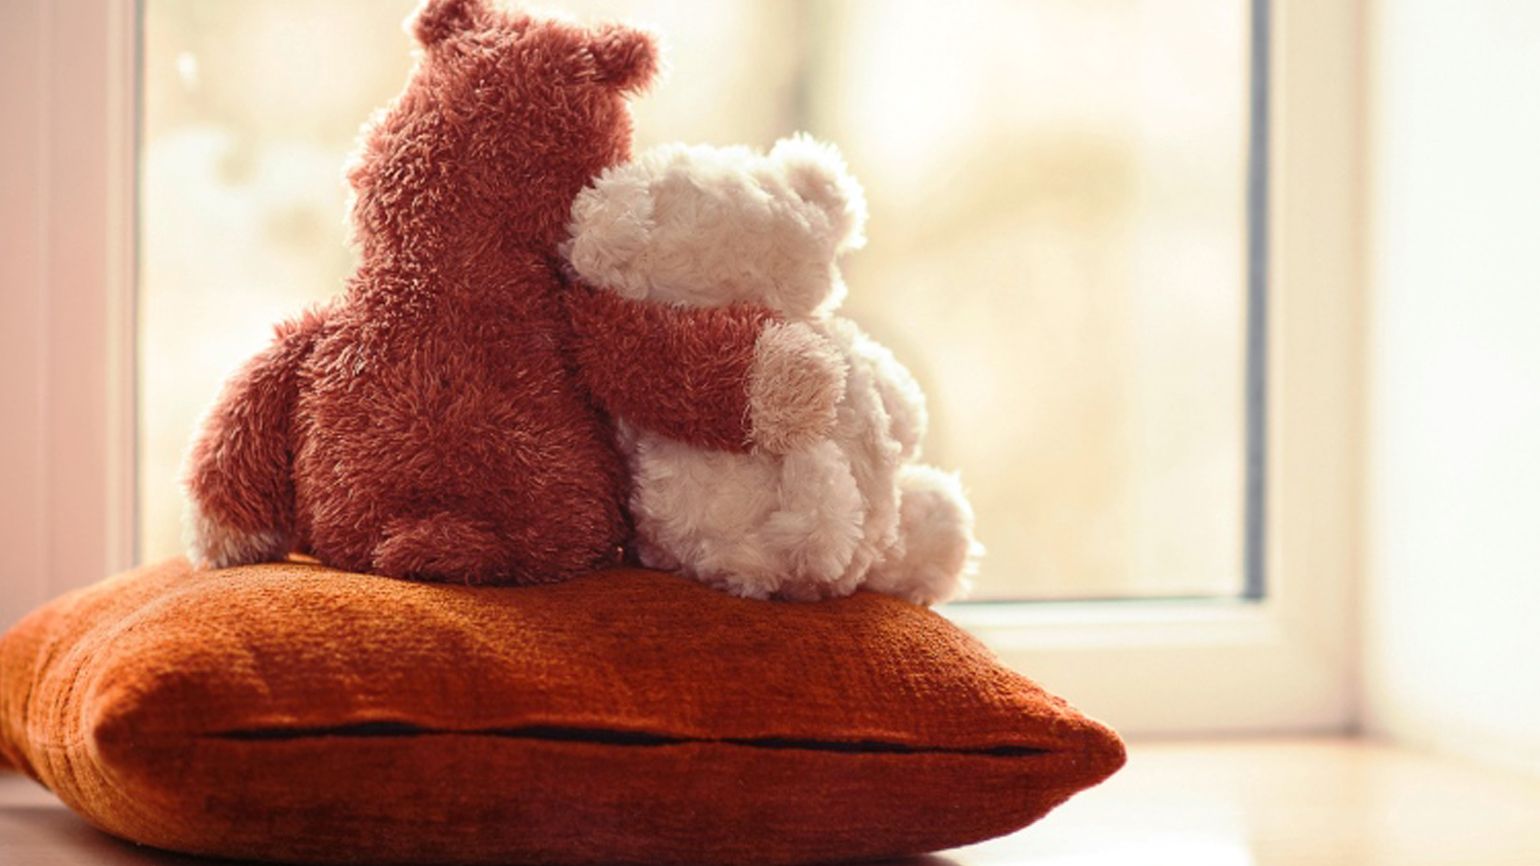 Teddy Bear Gifting: What Does Gifting A Teddy Bear Mean? – Goodlifebean